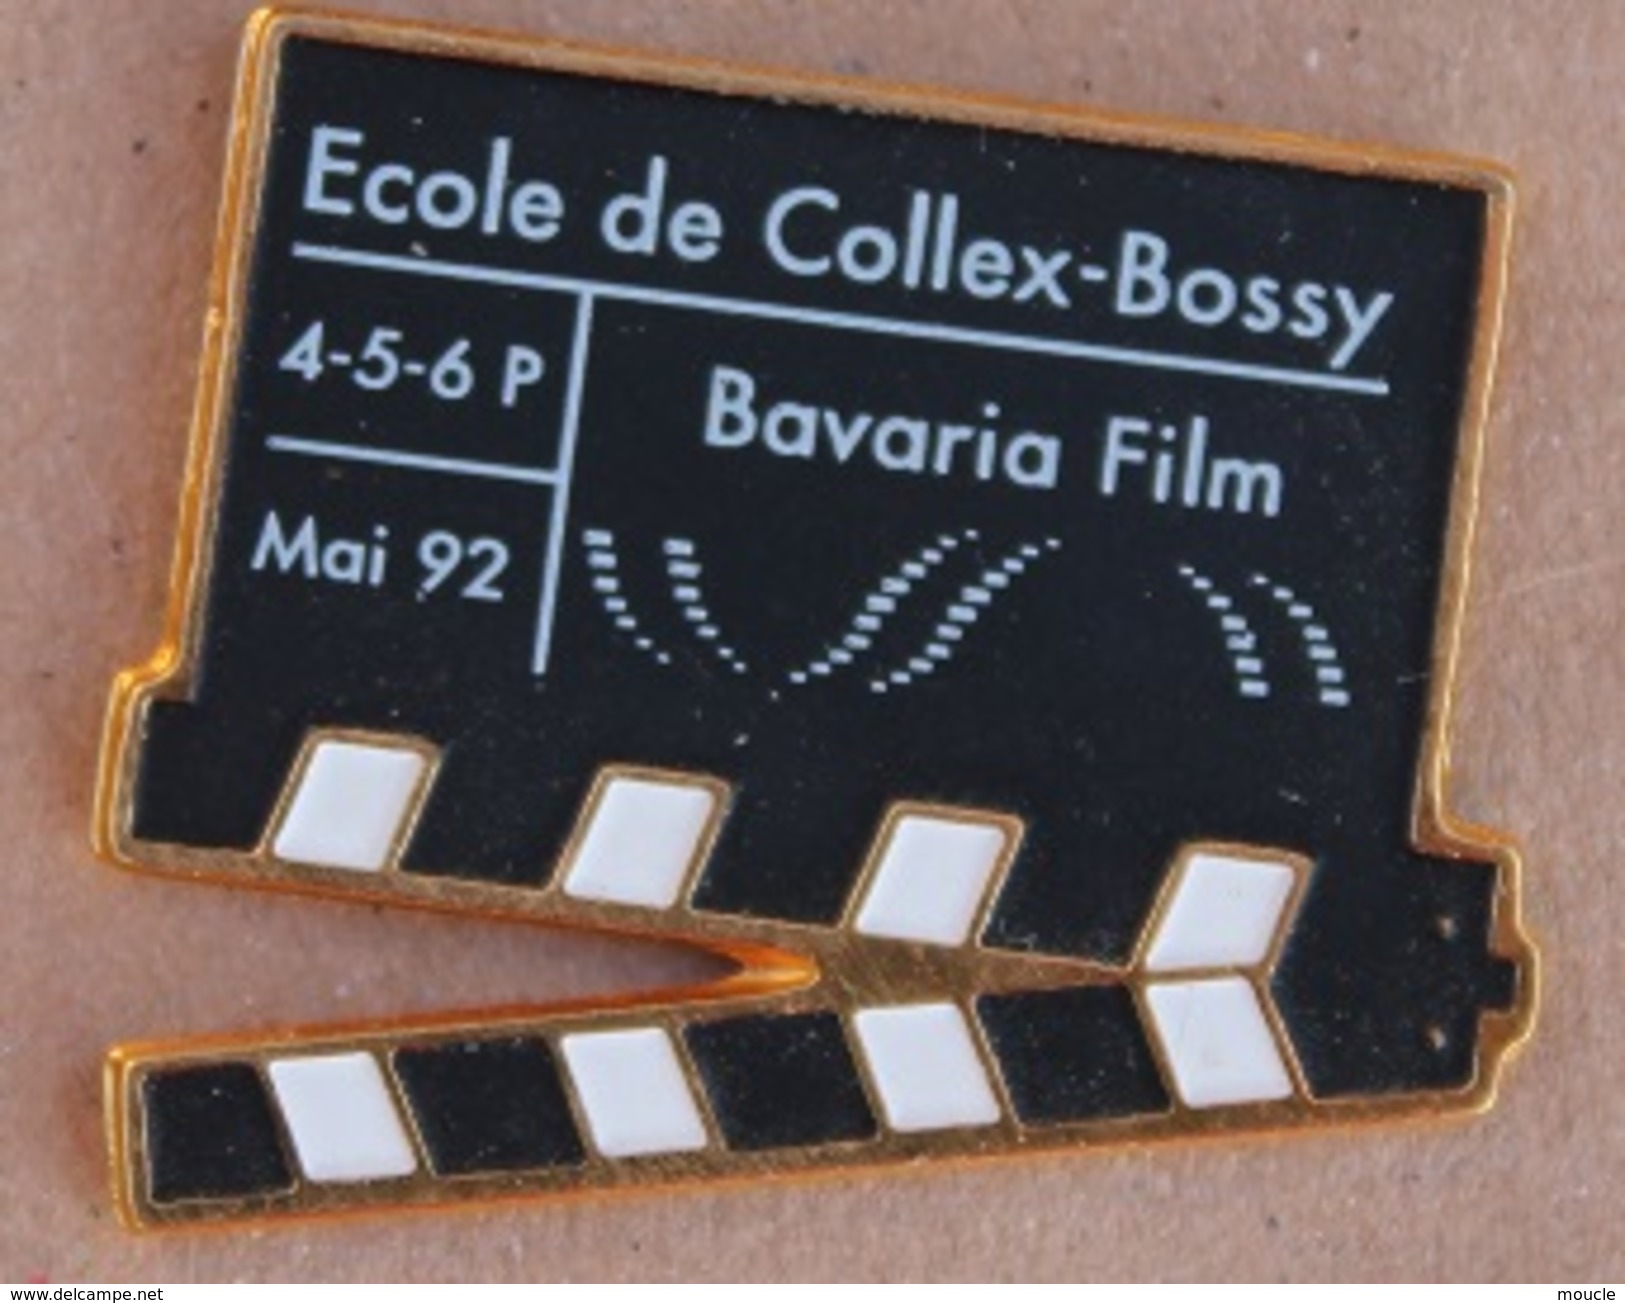 CLAP DE REALISATEUR - CINEMA - FILM - ECOLE DE COLLEY-BOSSY - GENEVE - SUISSE - BAVARIA FILM - MAI 92   -  (17) - Films